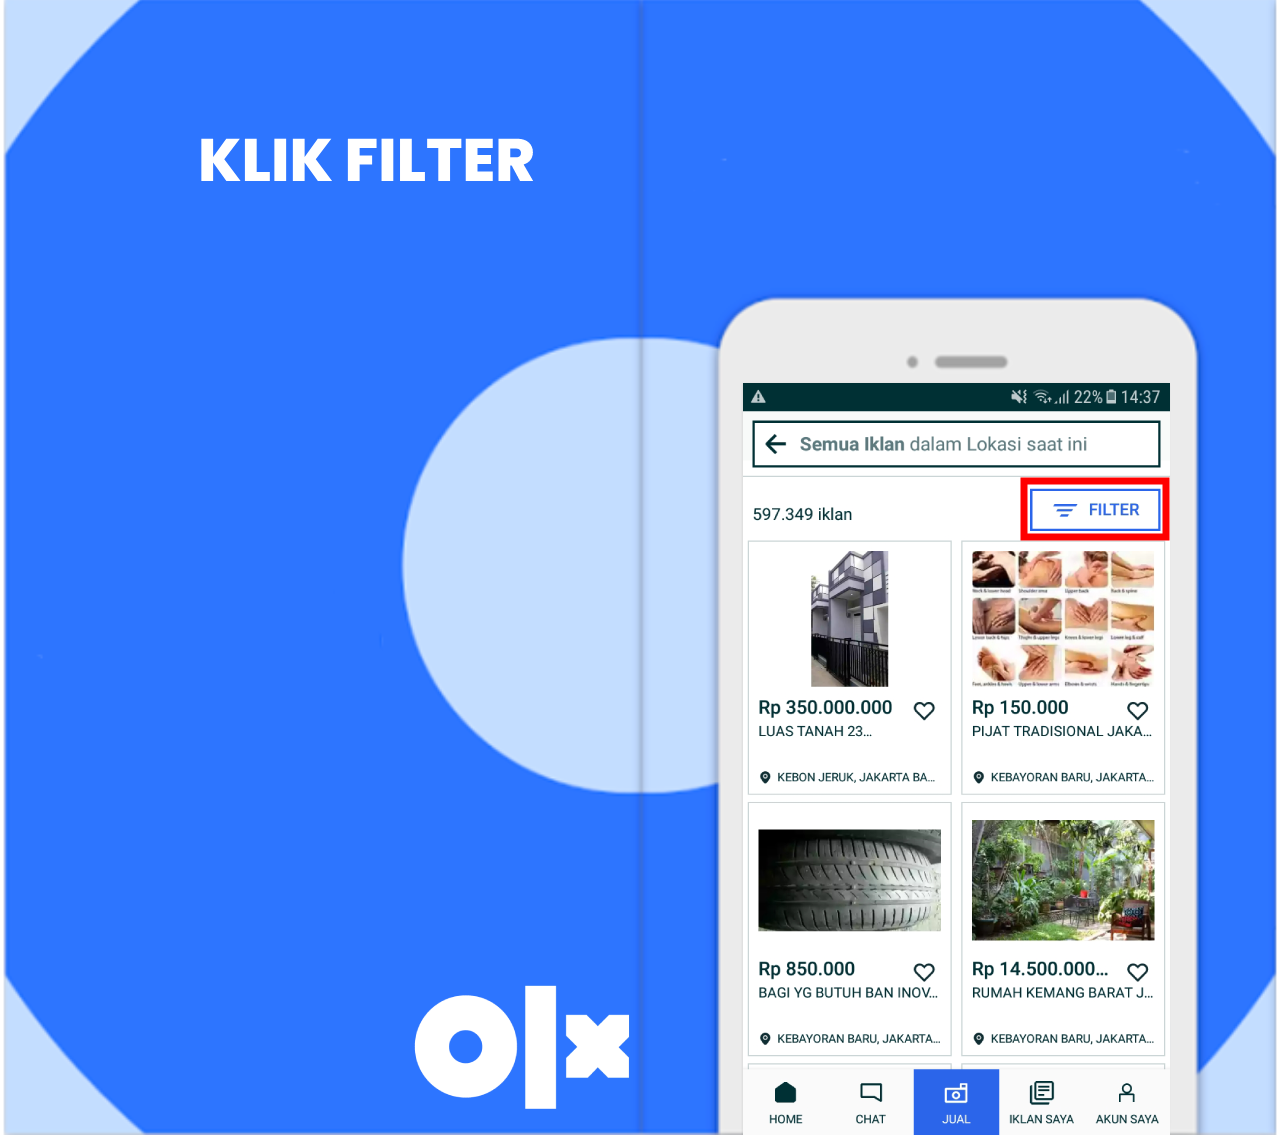 Klik_filter.png